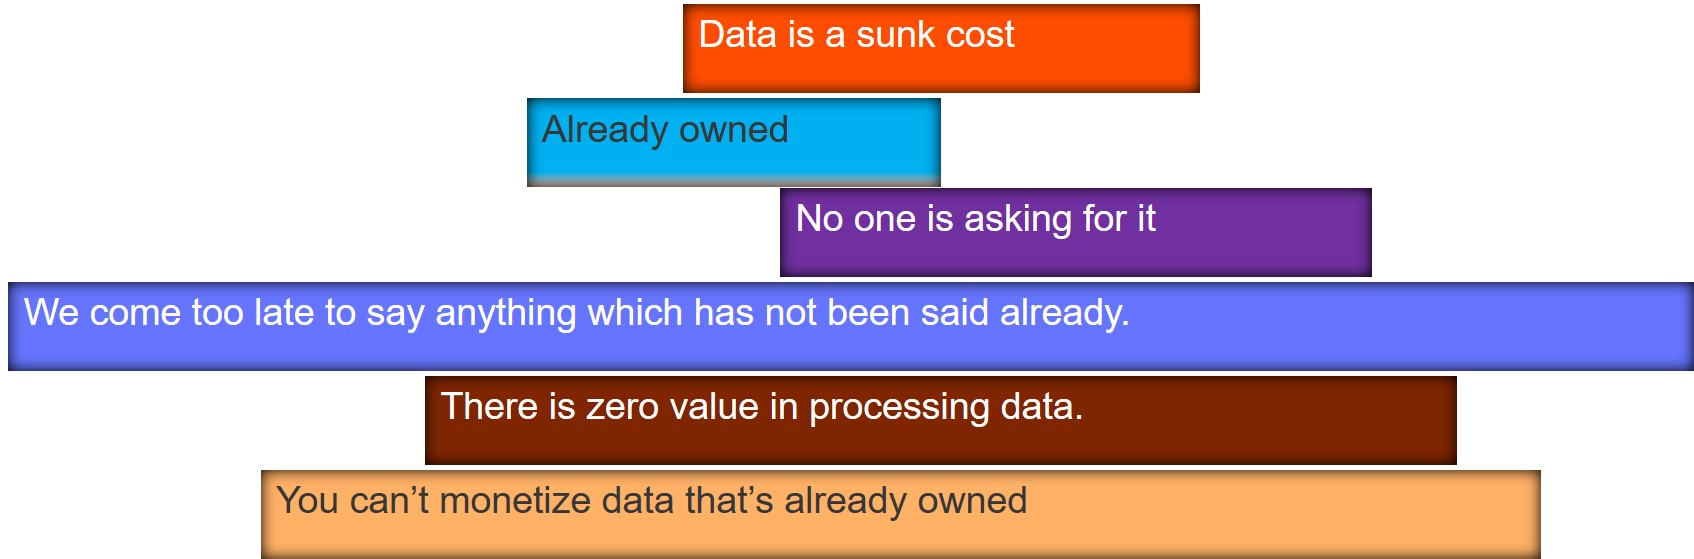 1-data monetization myths